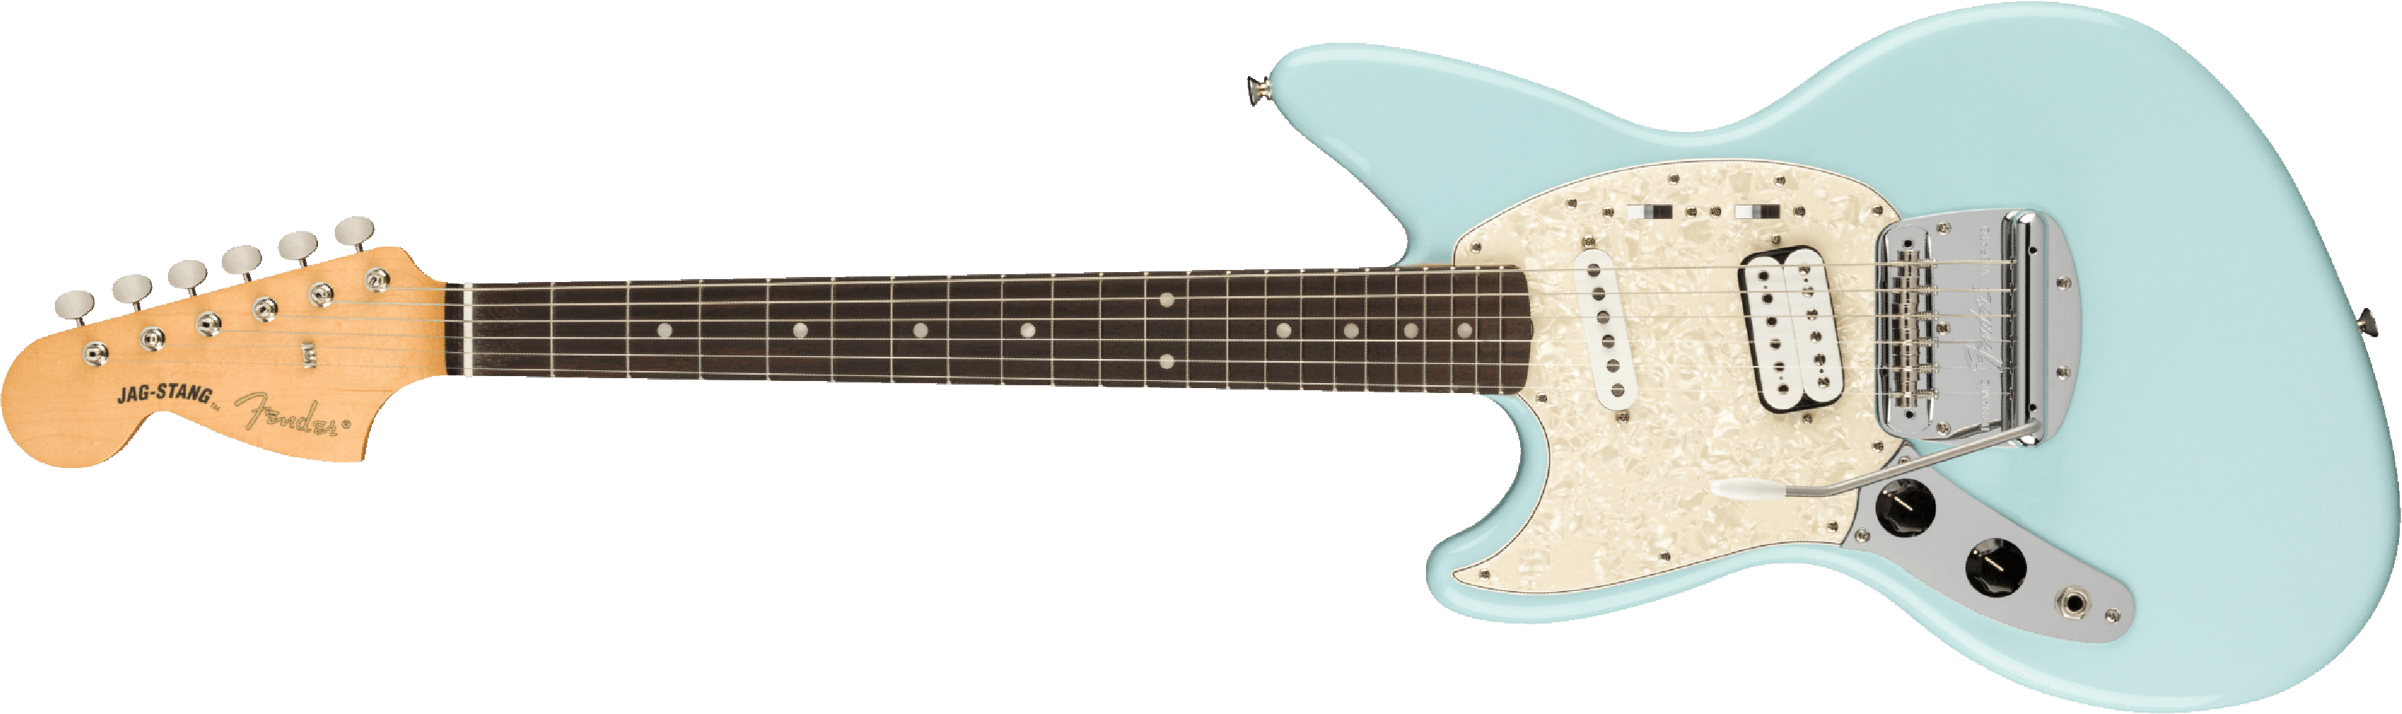 Fender Jag-stang Kurt Cobain Artist Gaucher Hs Trem Rw - Sonic Blue - Linkshandige elektrische gitaar - Main picture